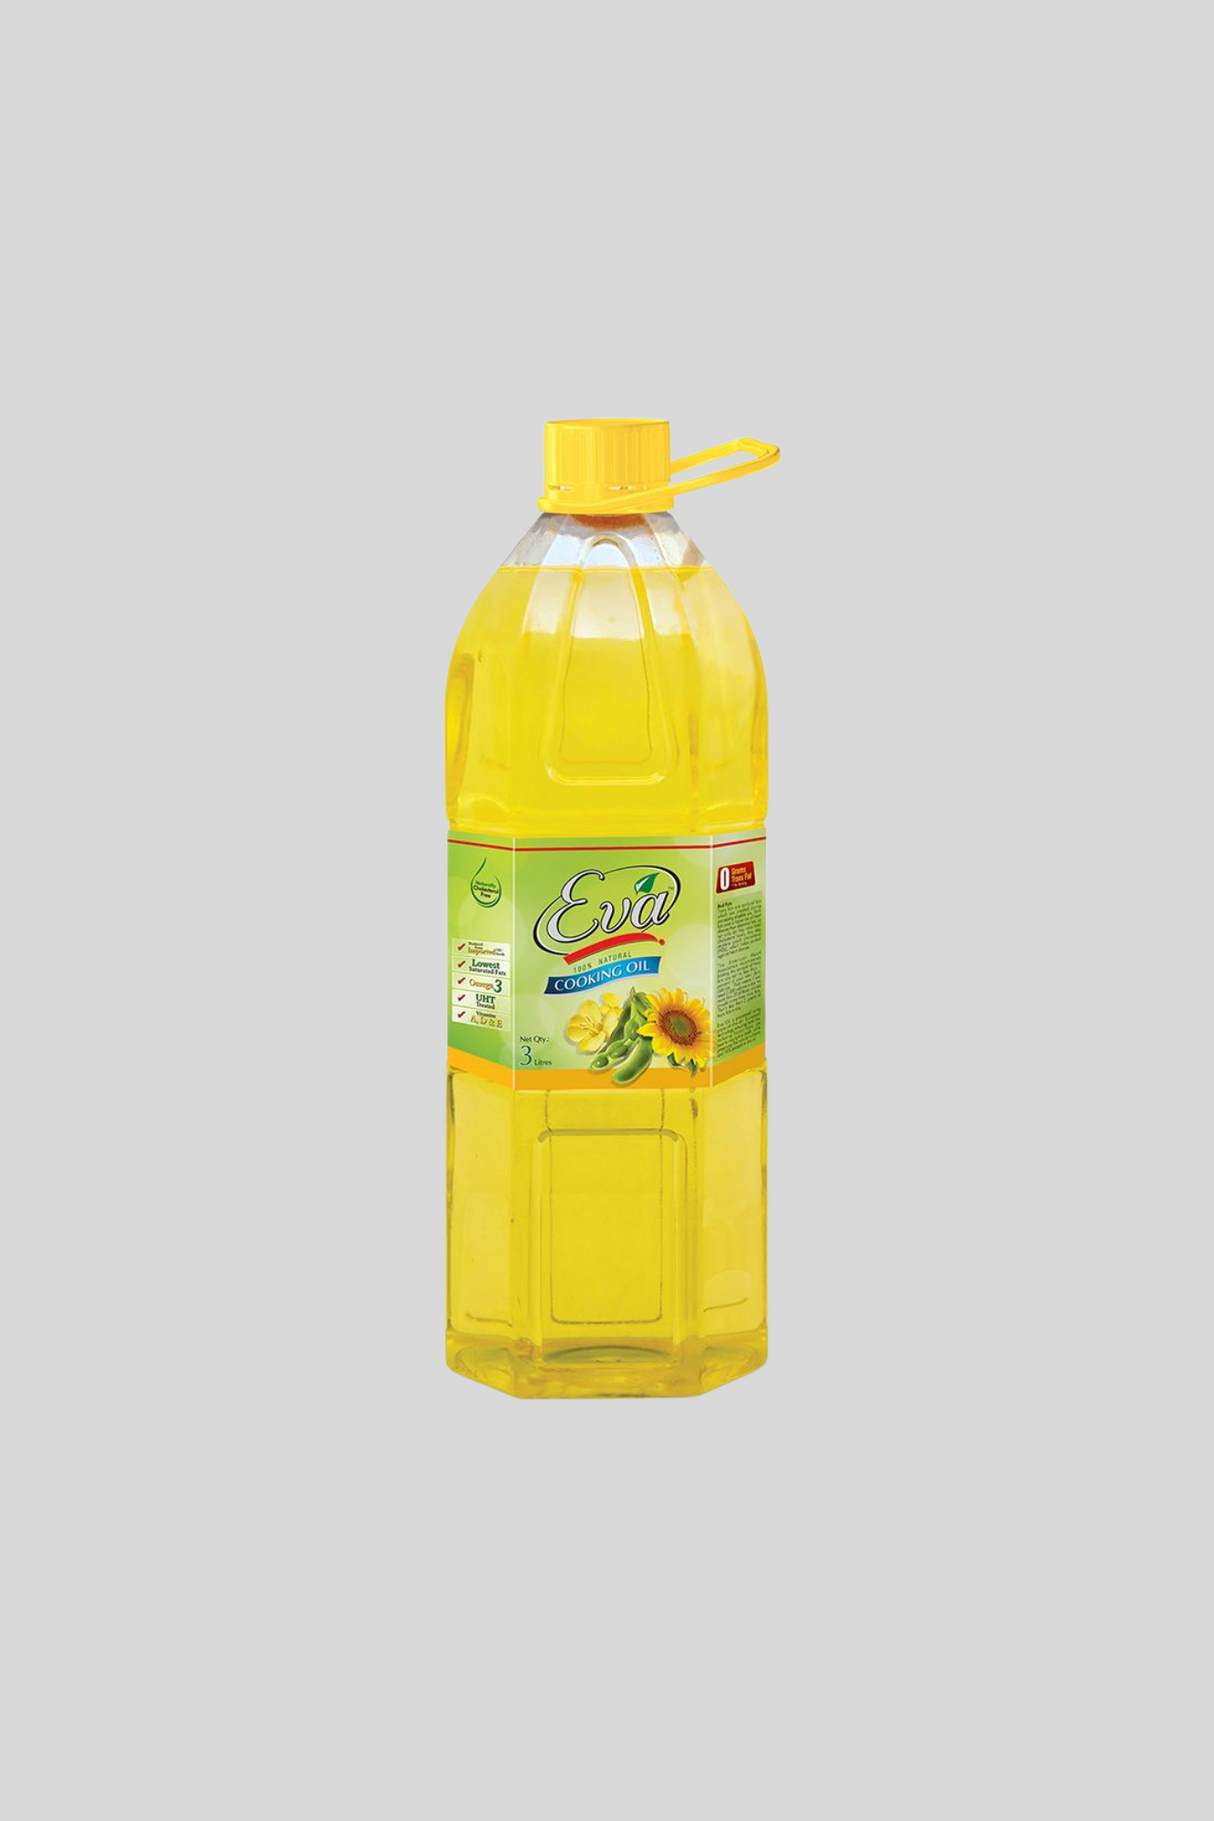 eva cooking oil 3l bottle